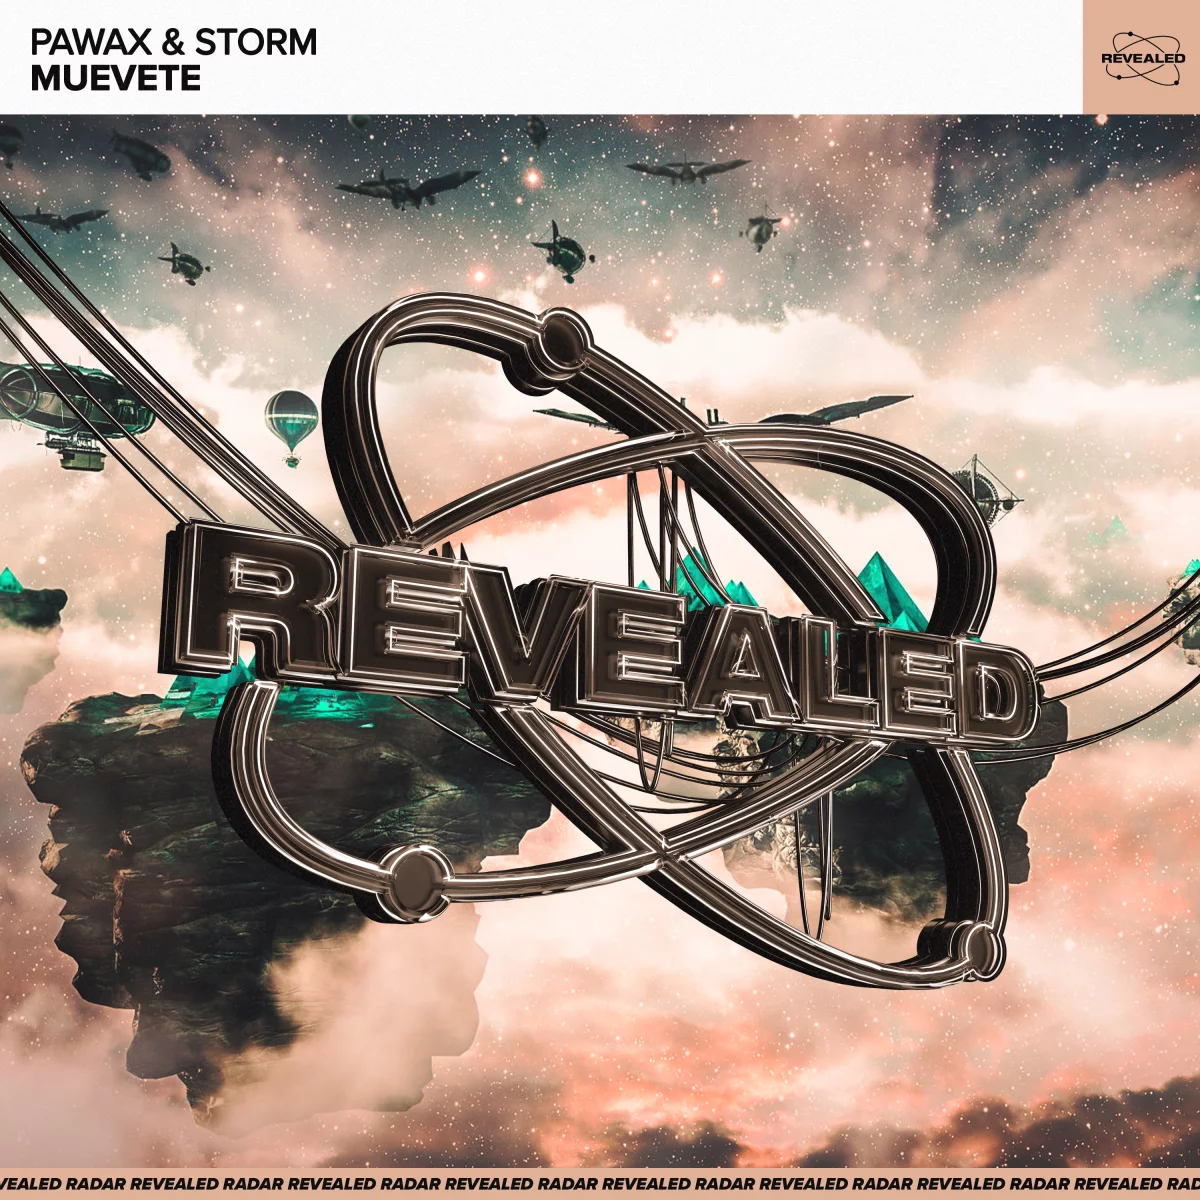 Muevete - Pawax⁠ & Storm⁠